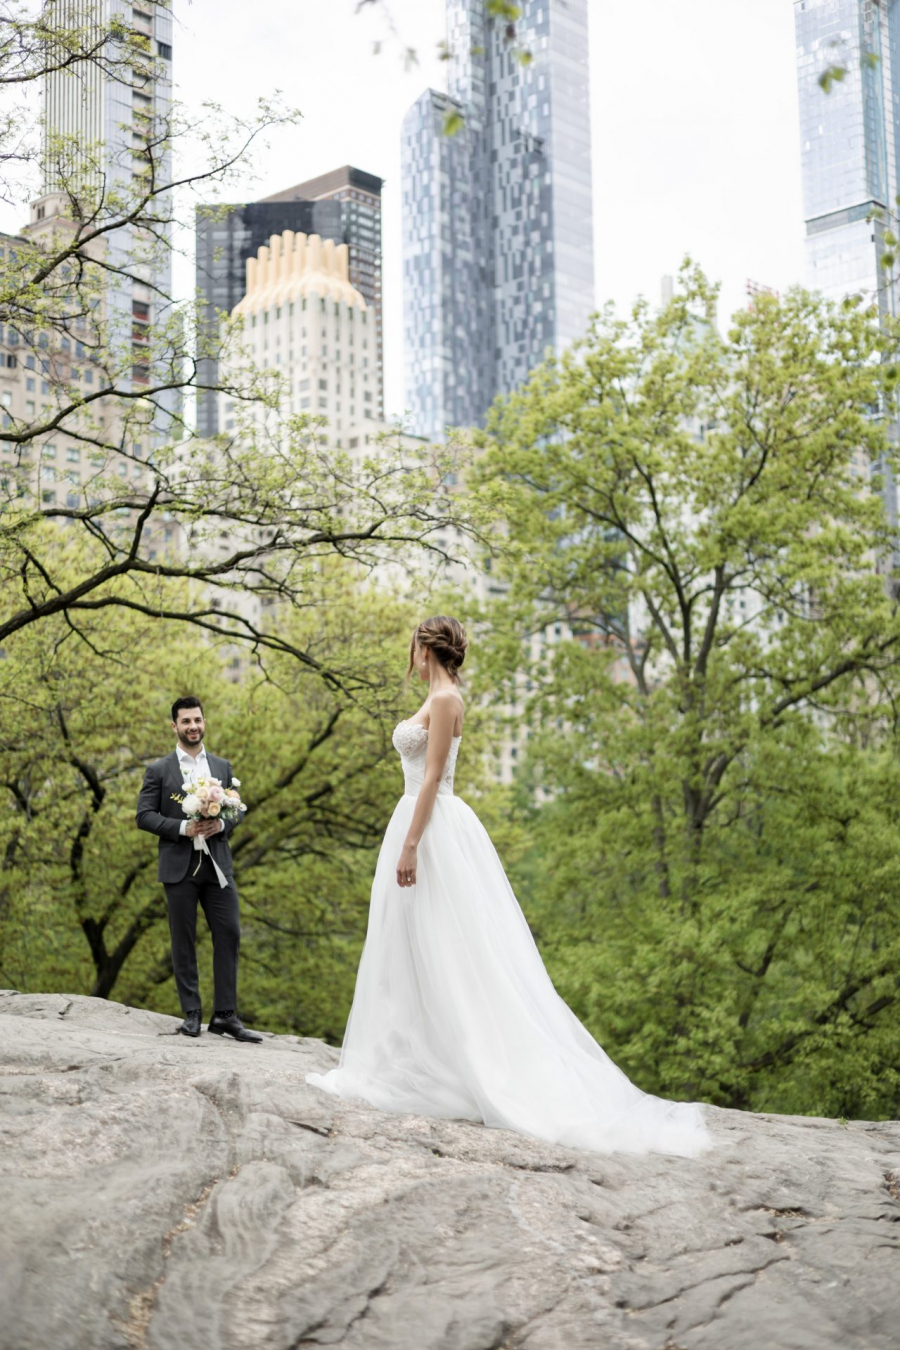 simple wedding central park nyc 4